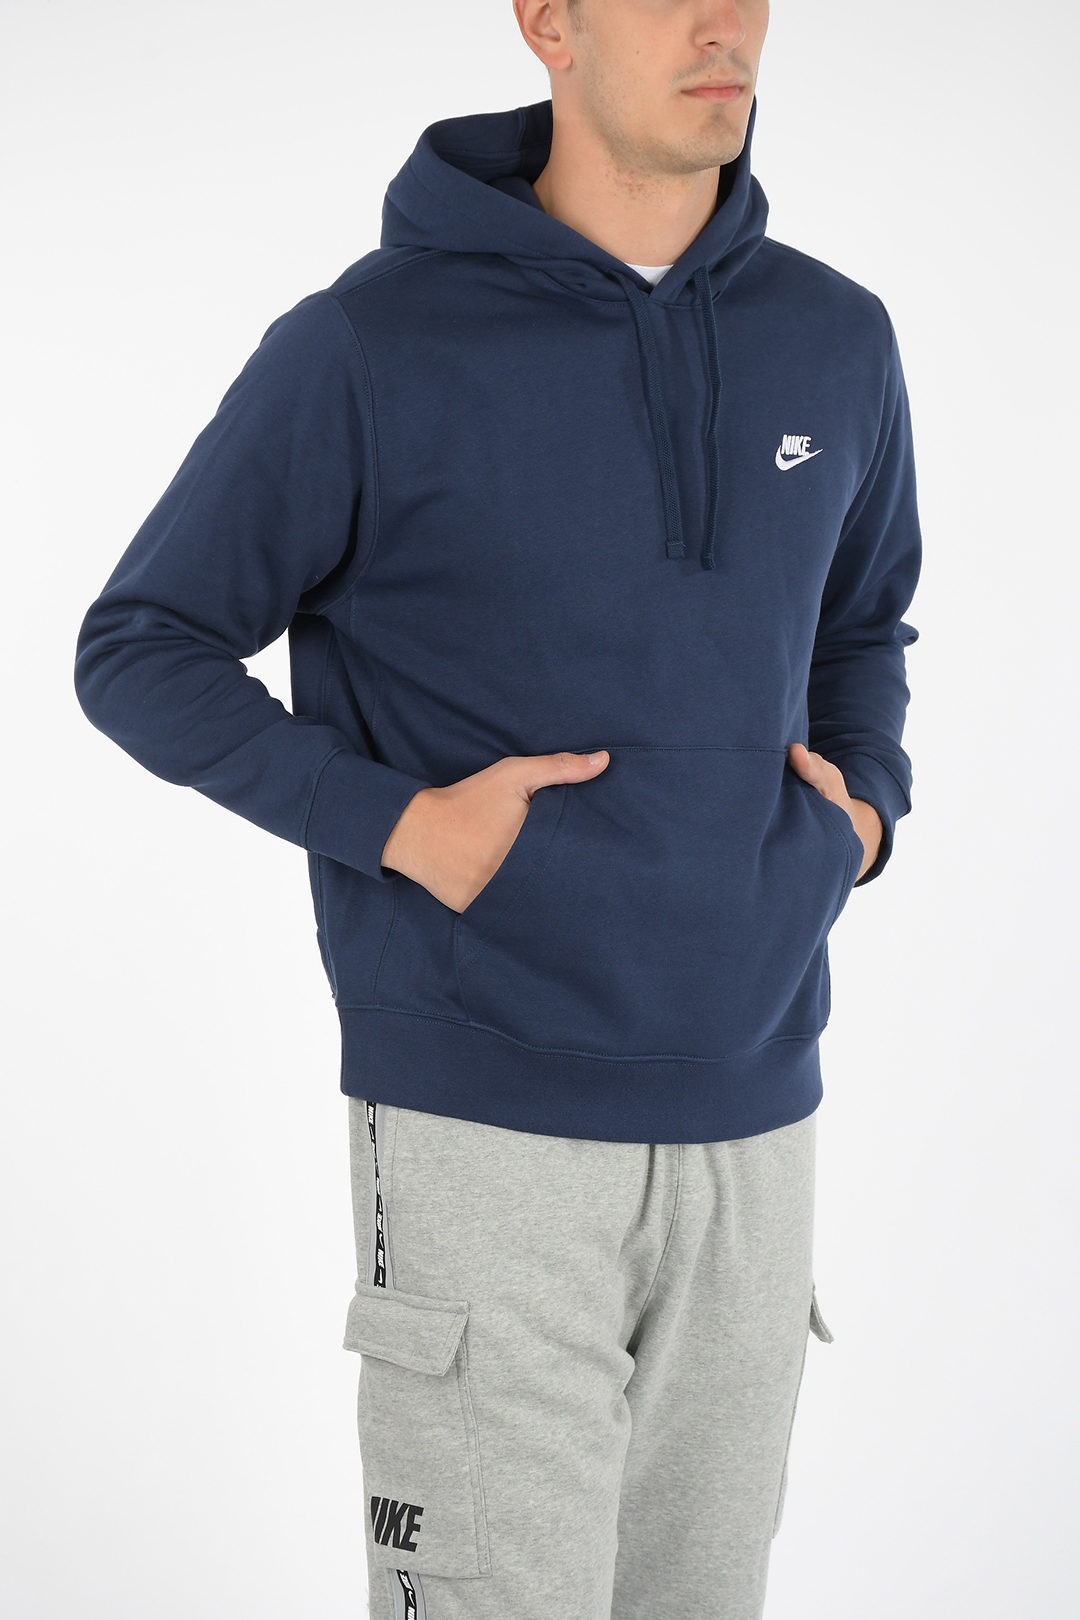 Nike Logo Embroidered Hoodie Sweatshirt men - Glamood Outlet